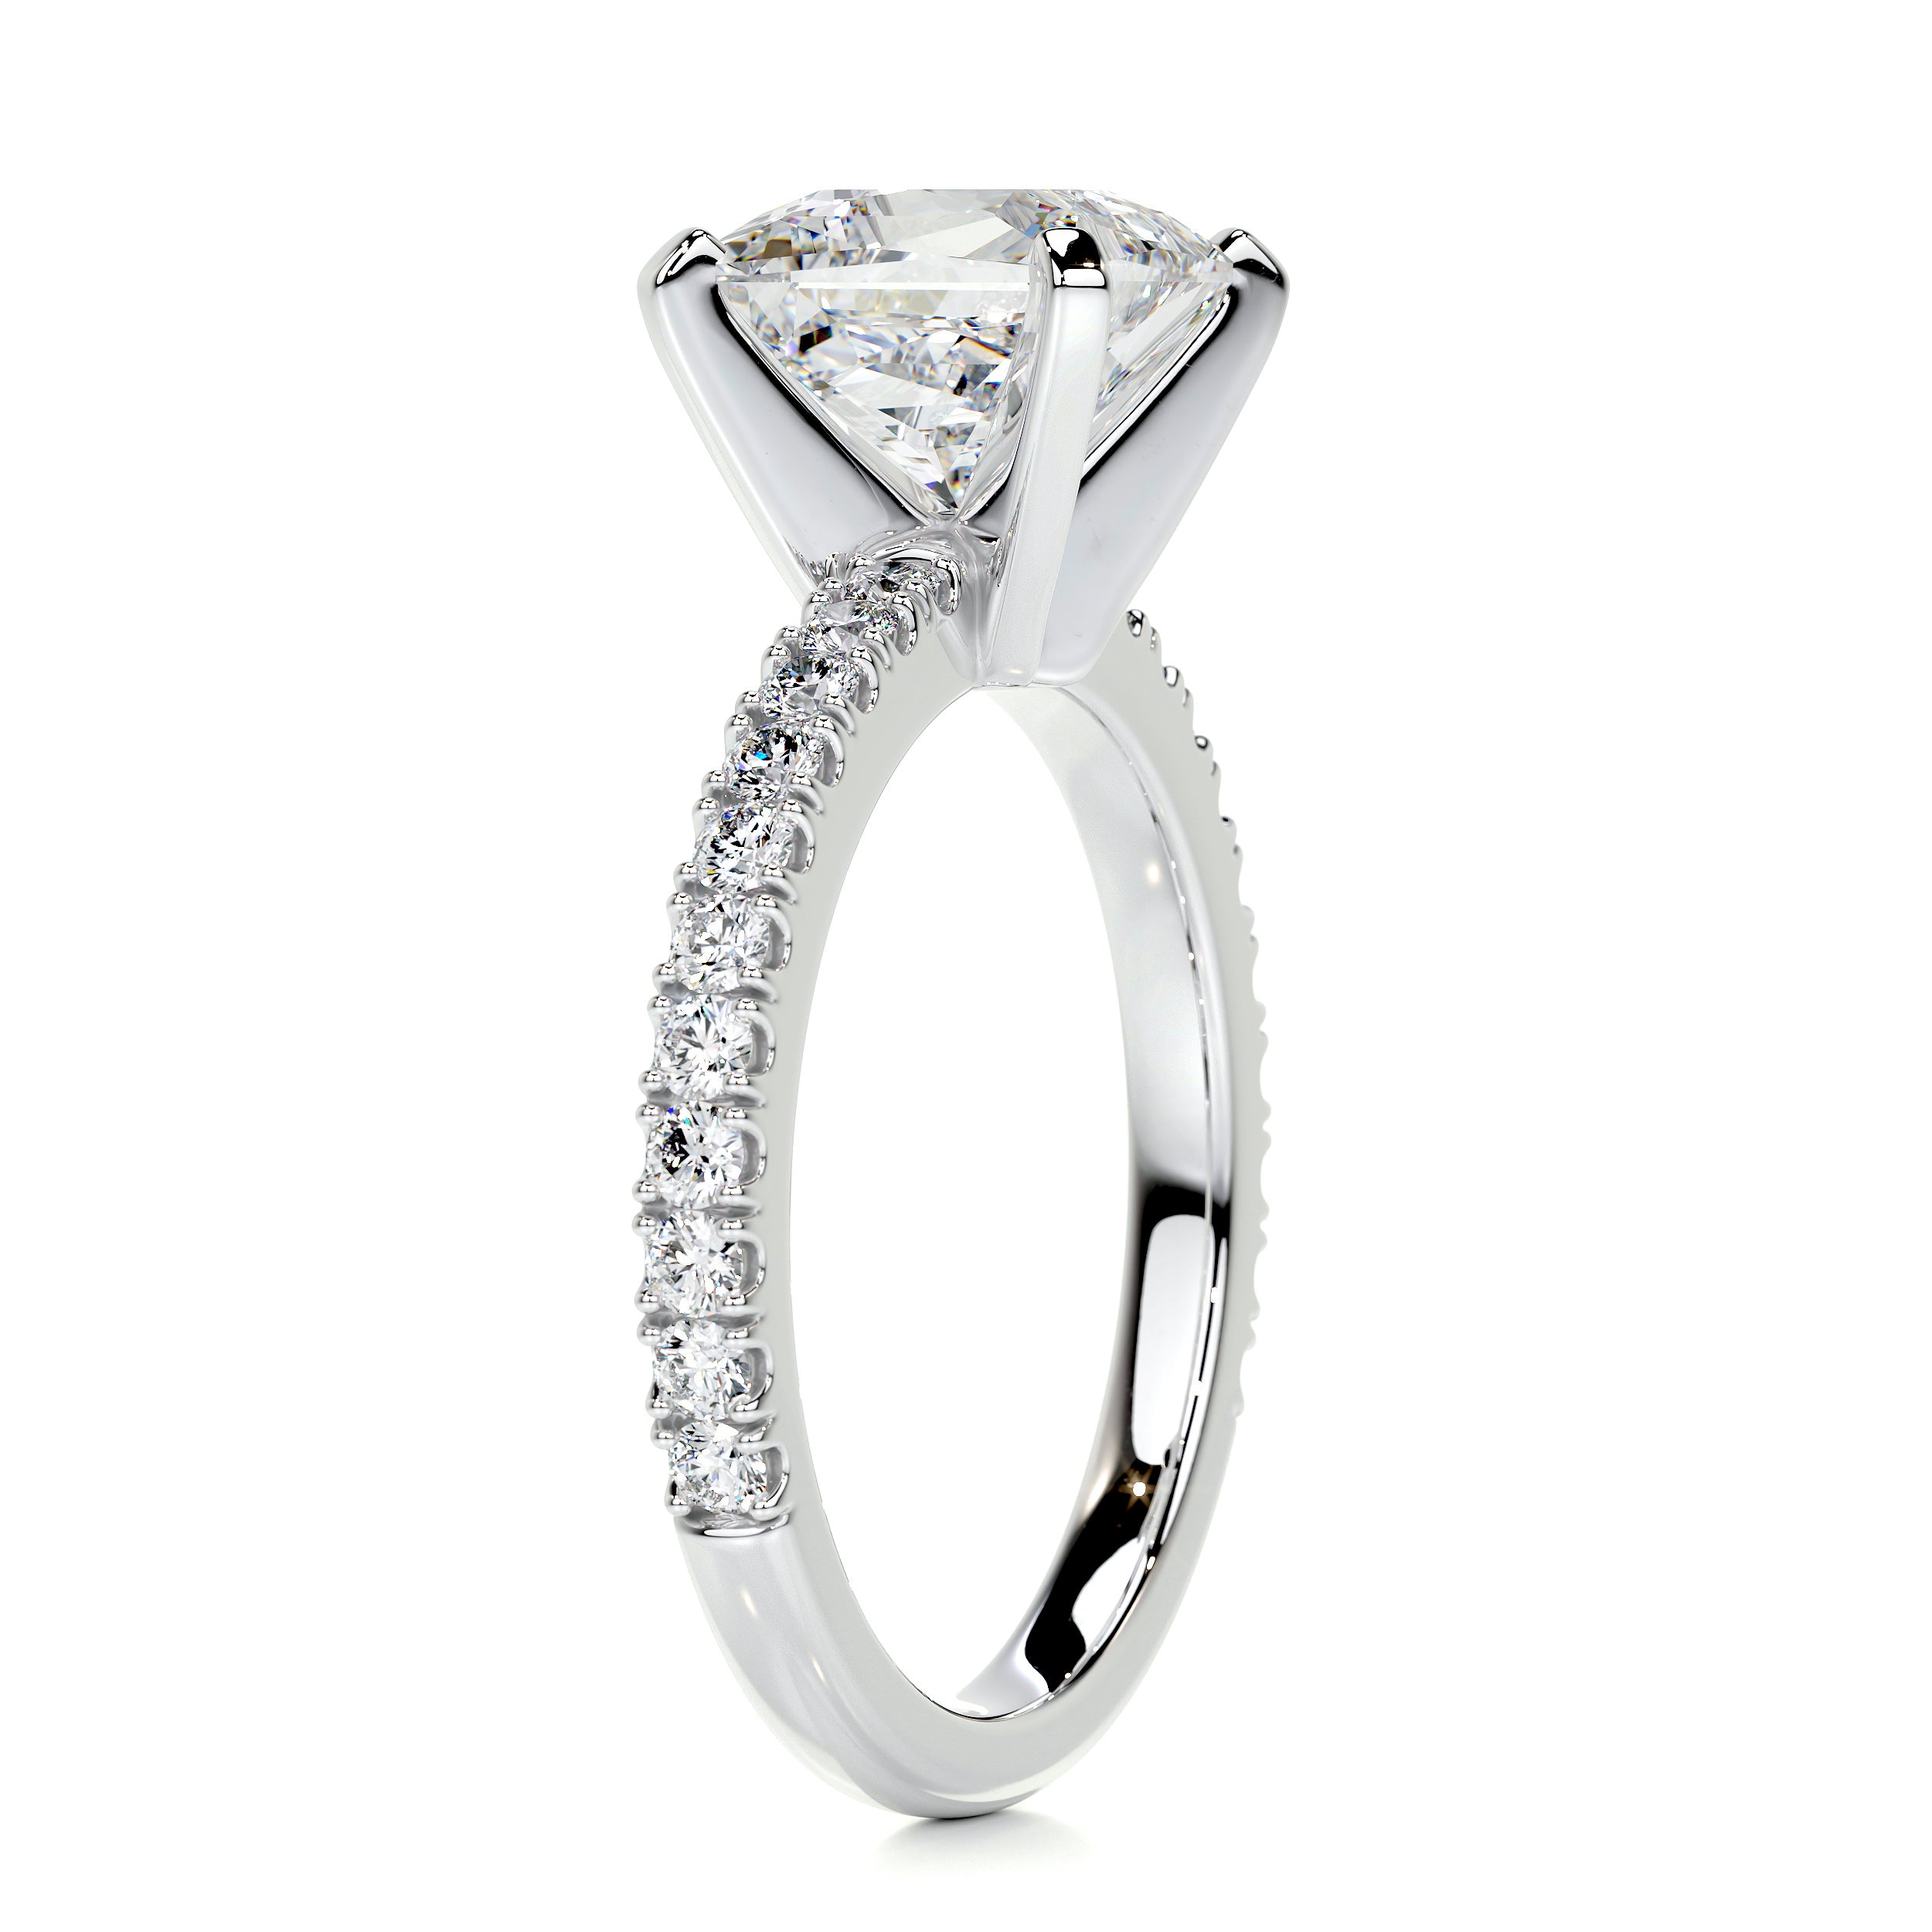 Stephanie Diamond Engagement Ring   (2.3 Carat) -18K White Gold